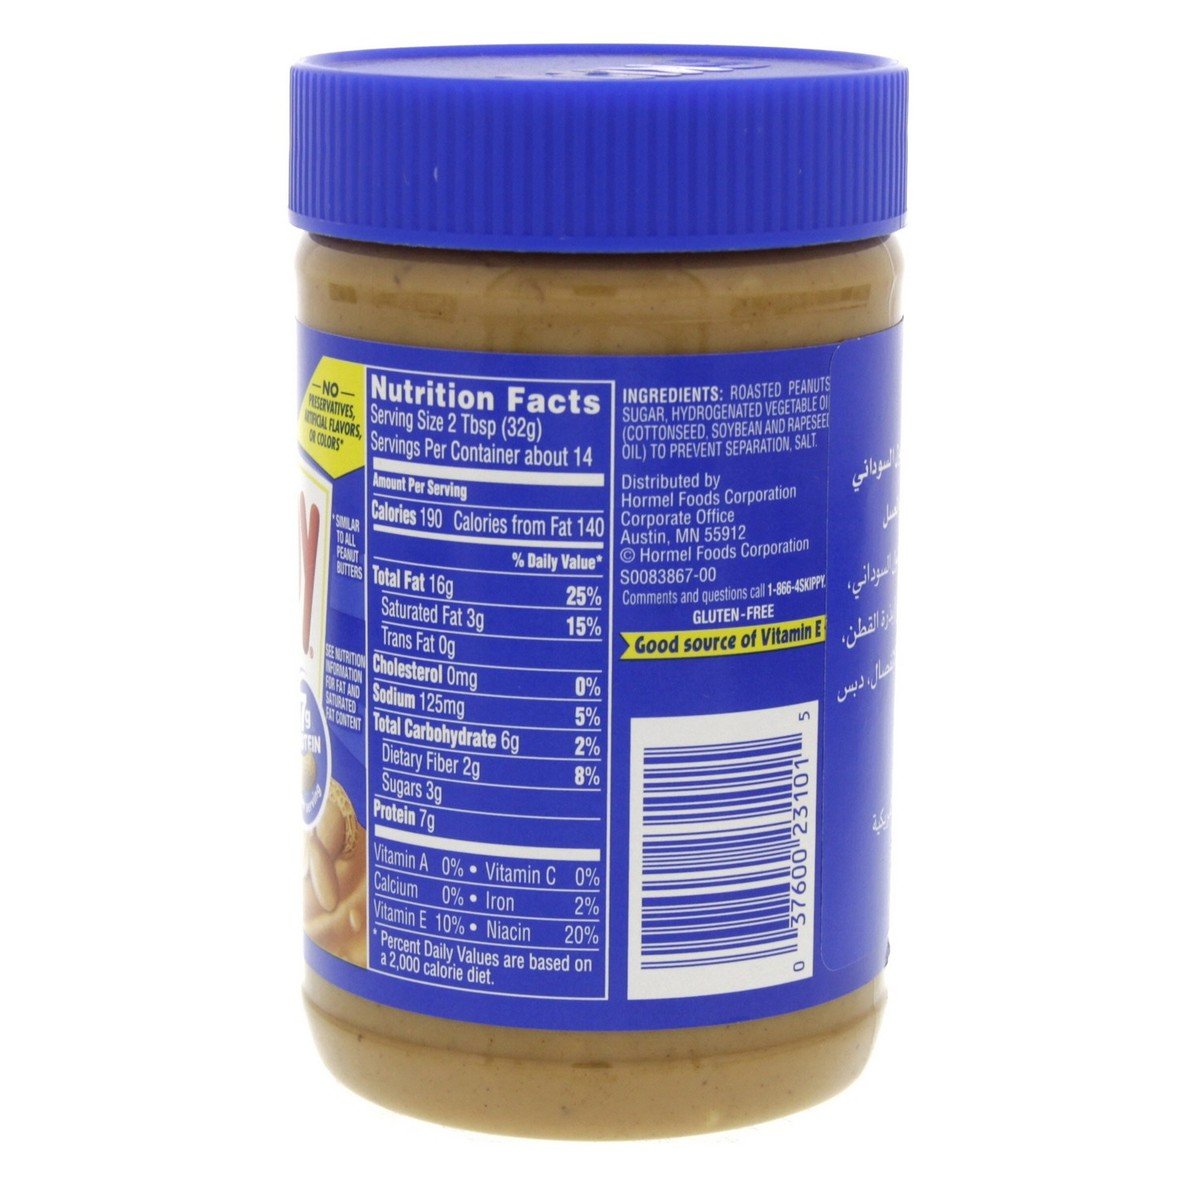 Skippy Extra Crunchy Peanut Butter 462 g